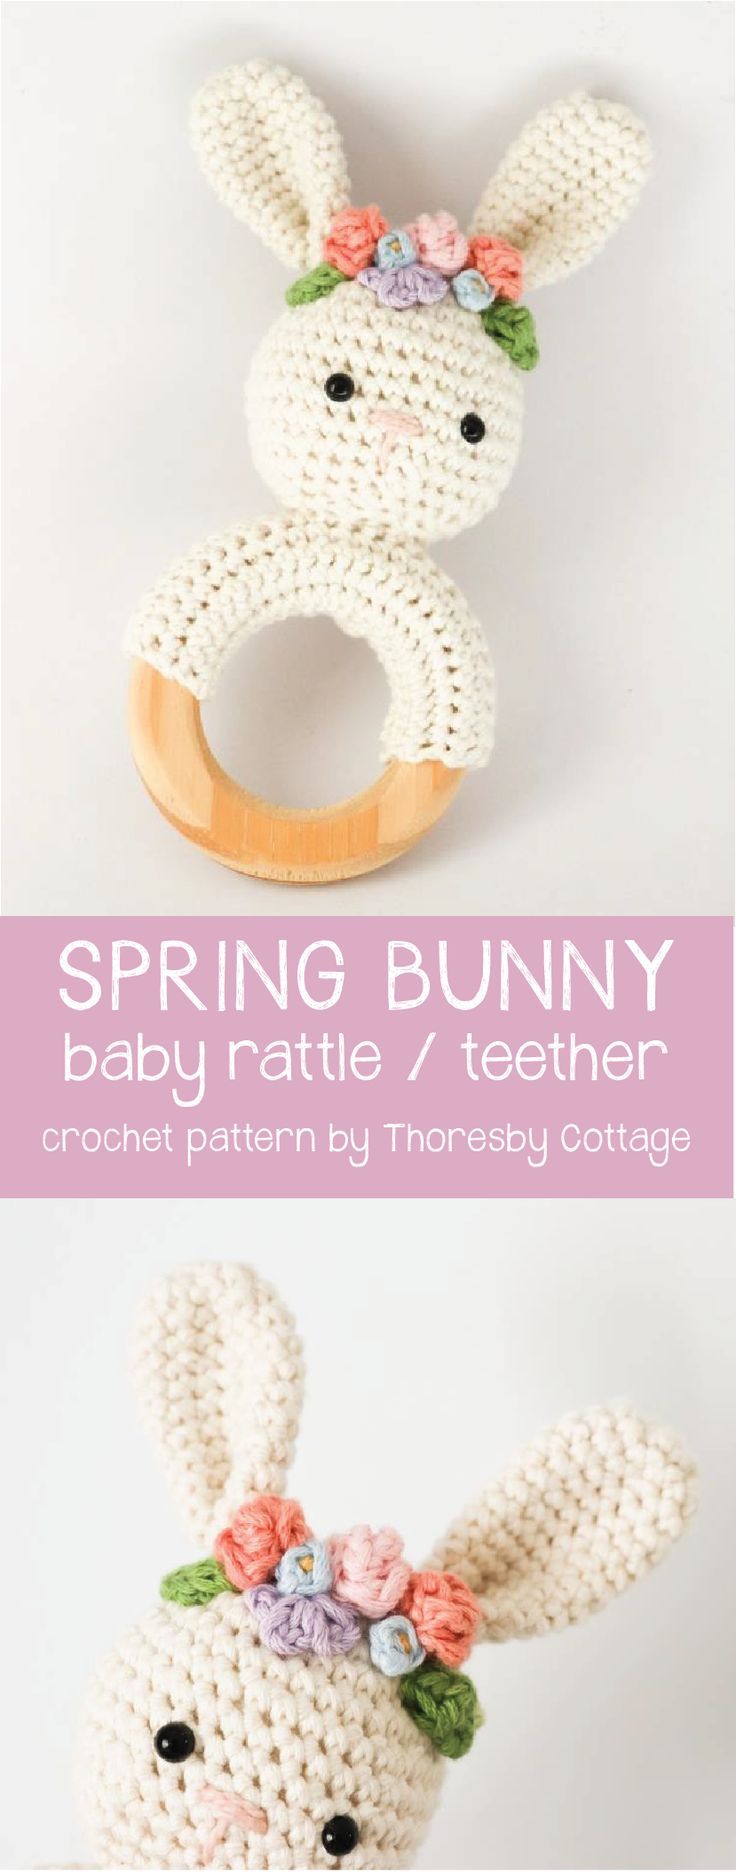 Spring-bunny-rattle-crochet-pattern.jpg